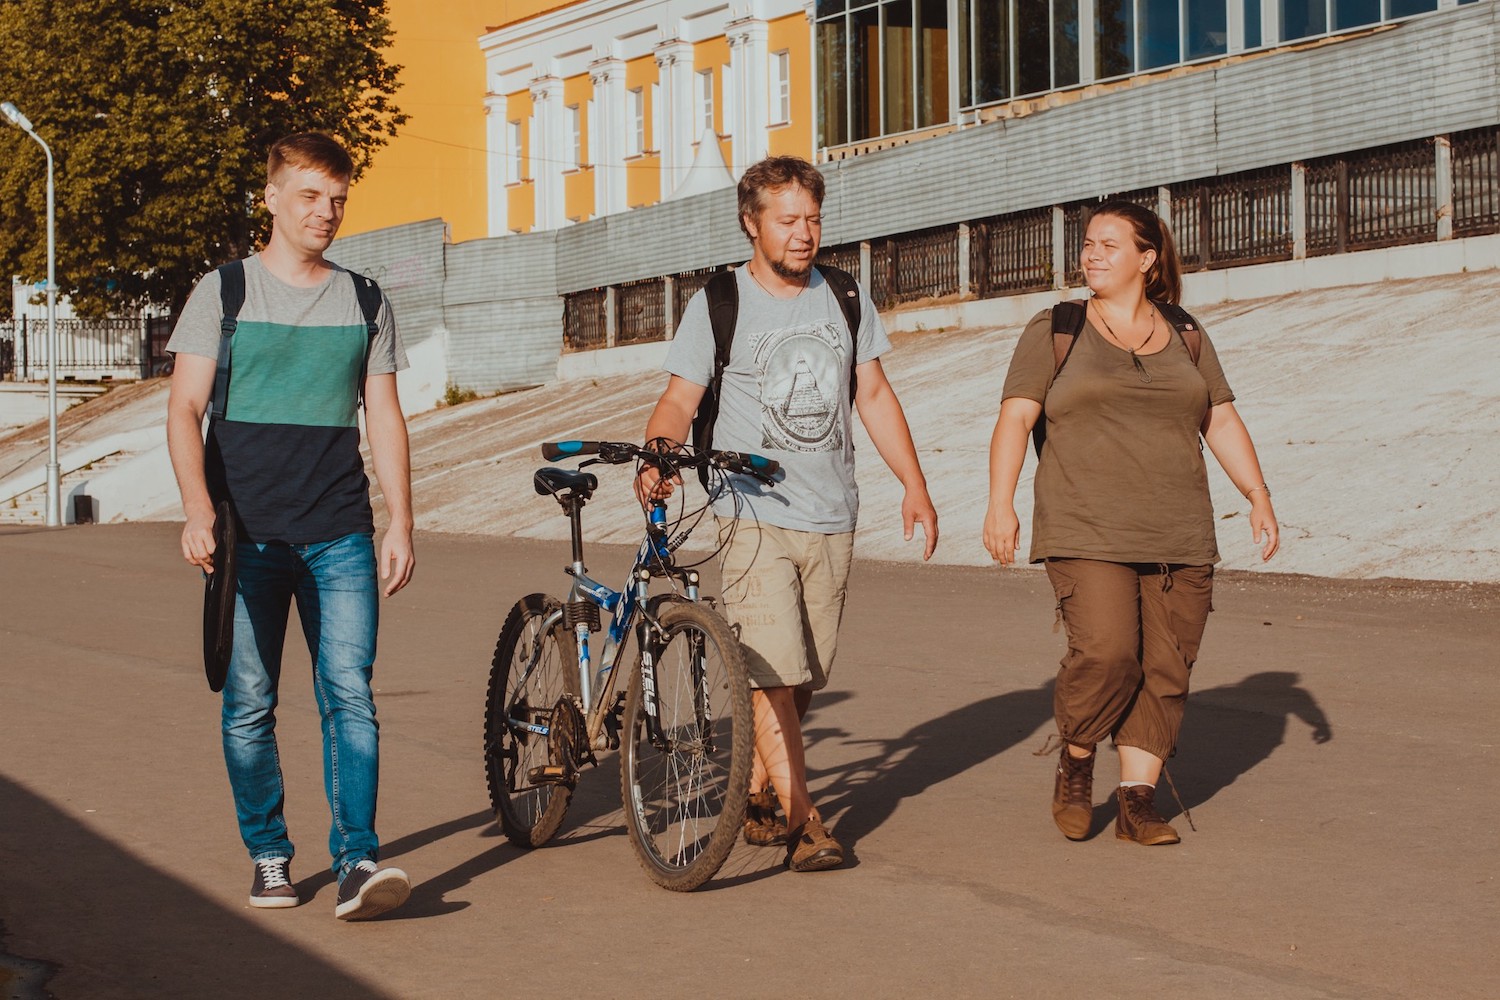 Mikhail Danilovich, Vladimir Sokolov and Anastasia Sechina on the streets of Perm. Image: Yaroslav Chernov